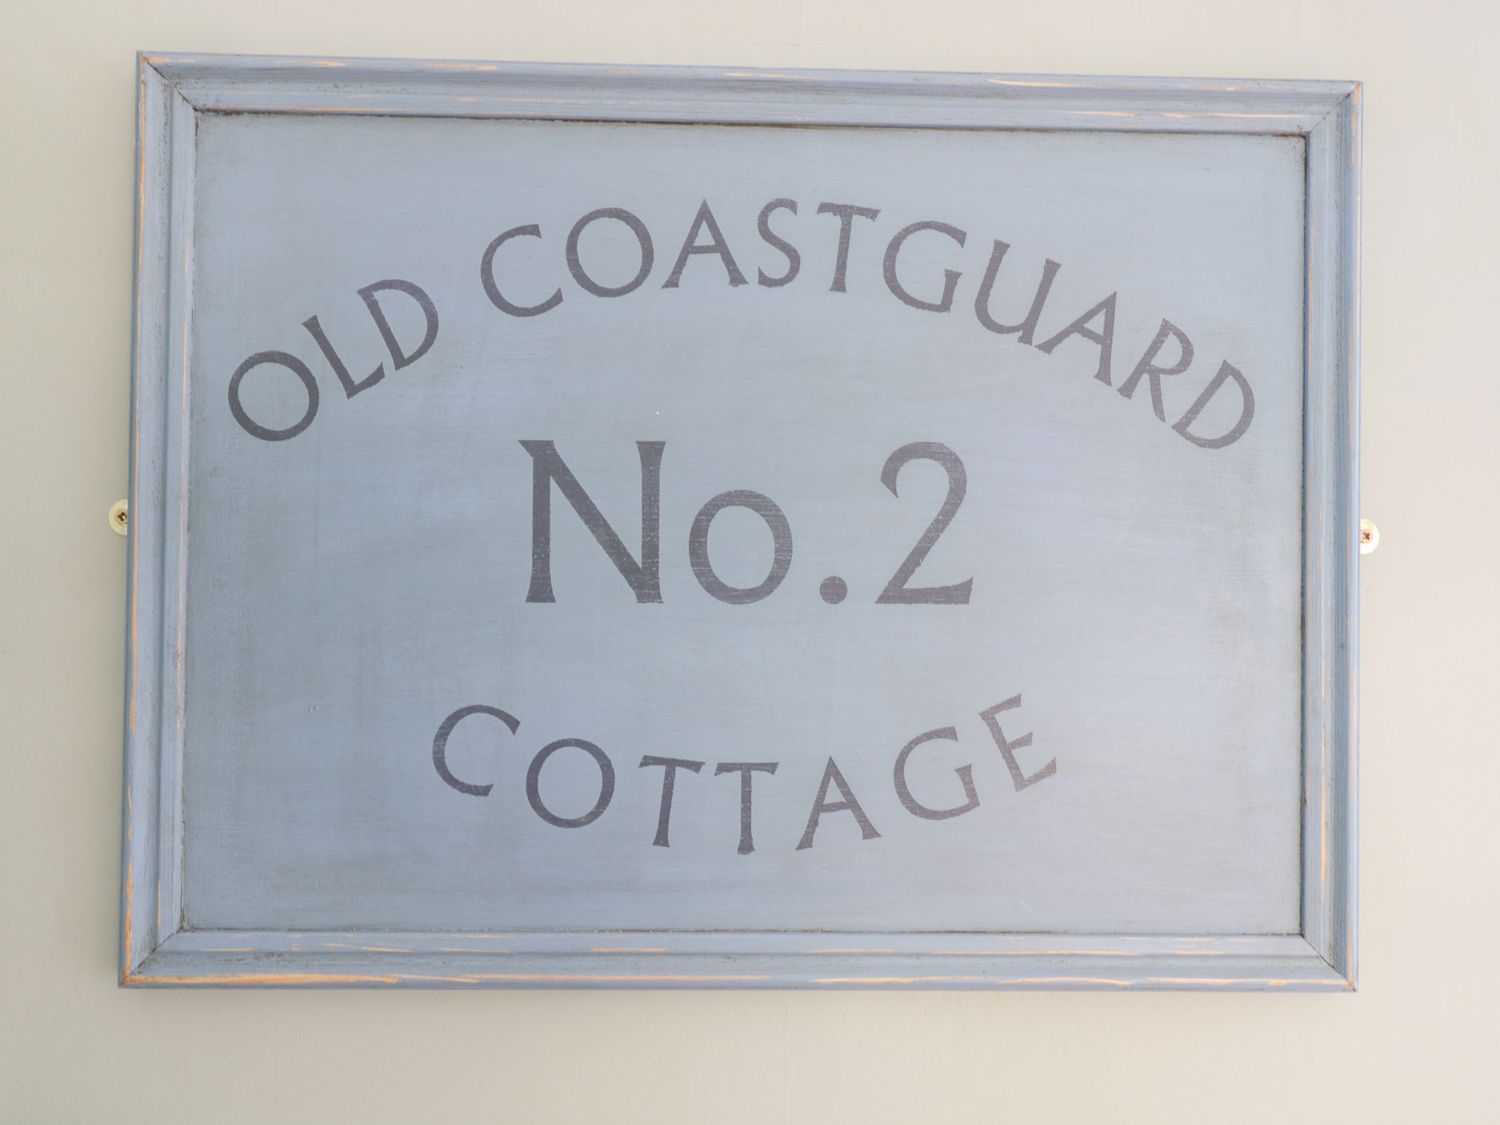 2 Old Coastguard House, North Wales